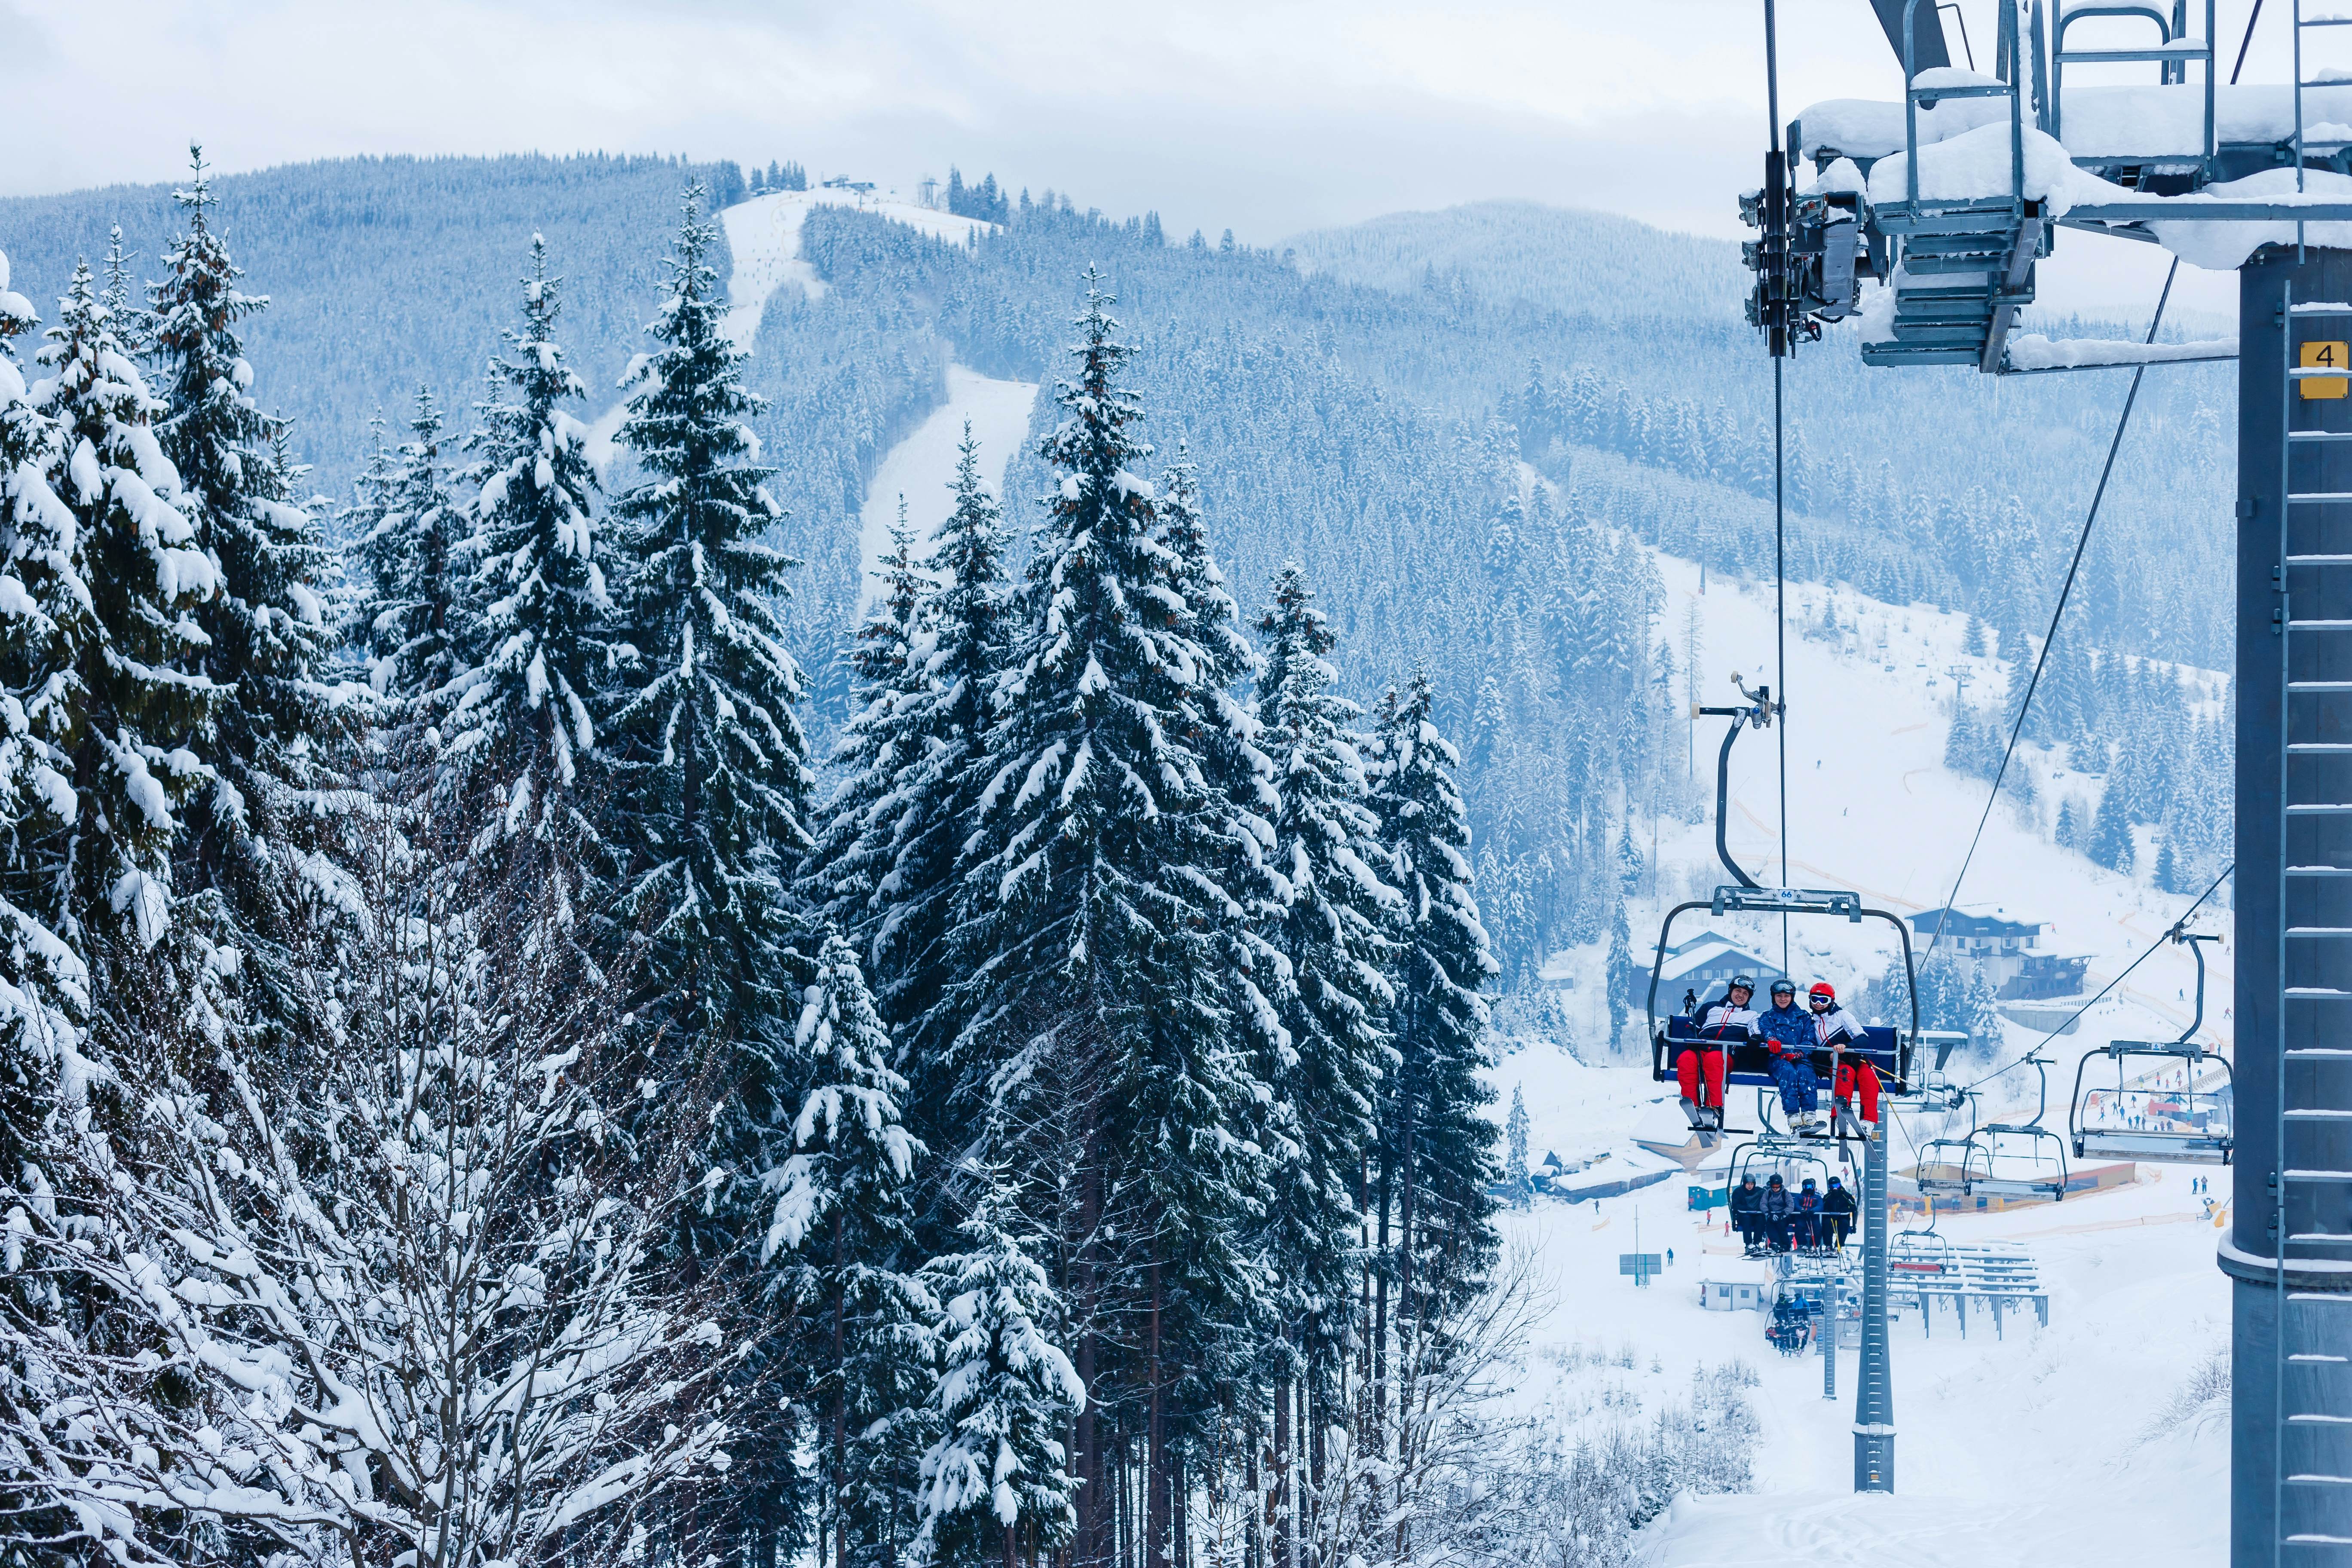 Top 10 ski resorts for après-ski